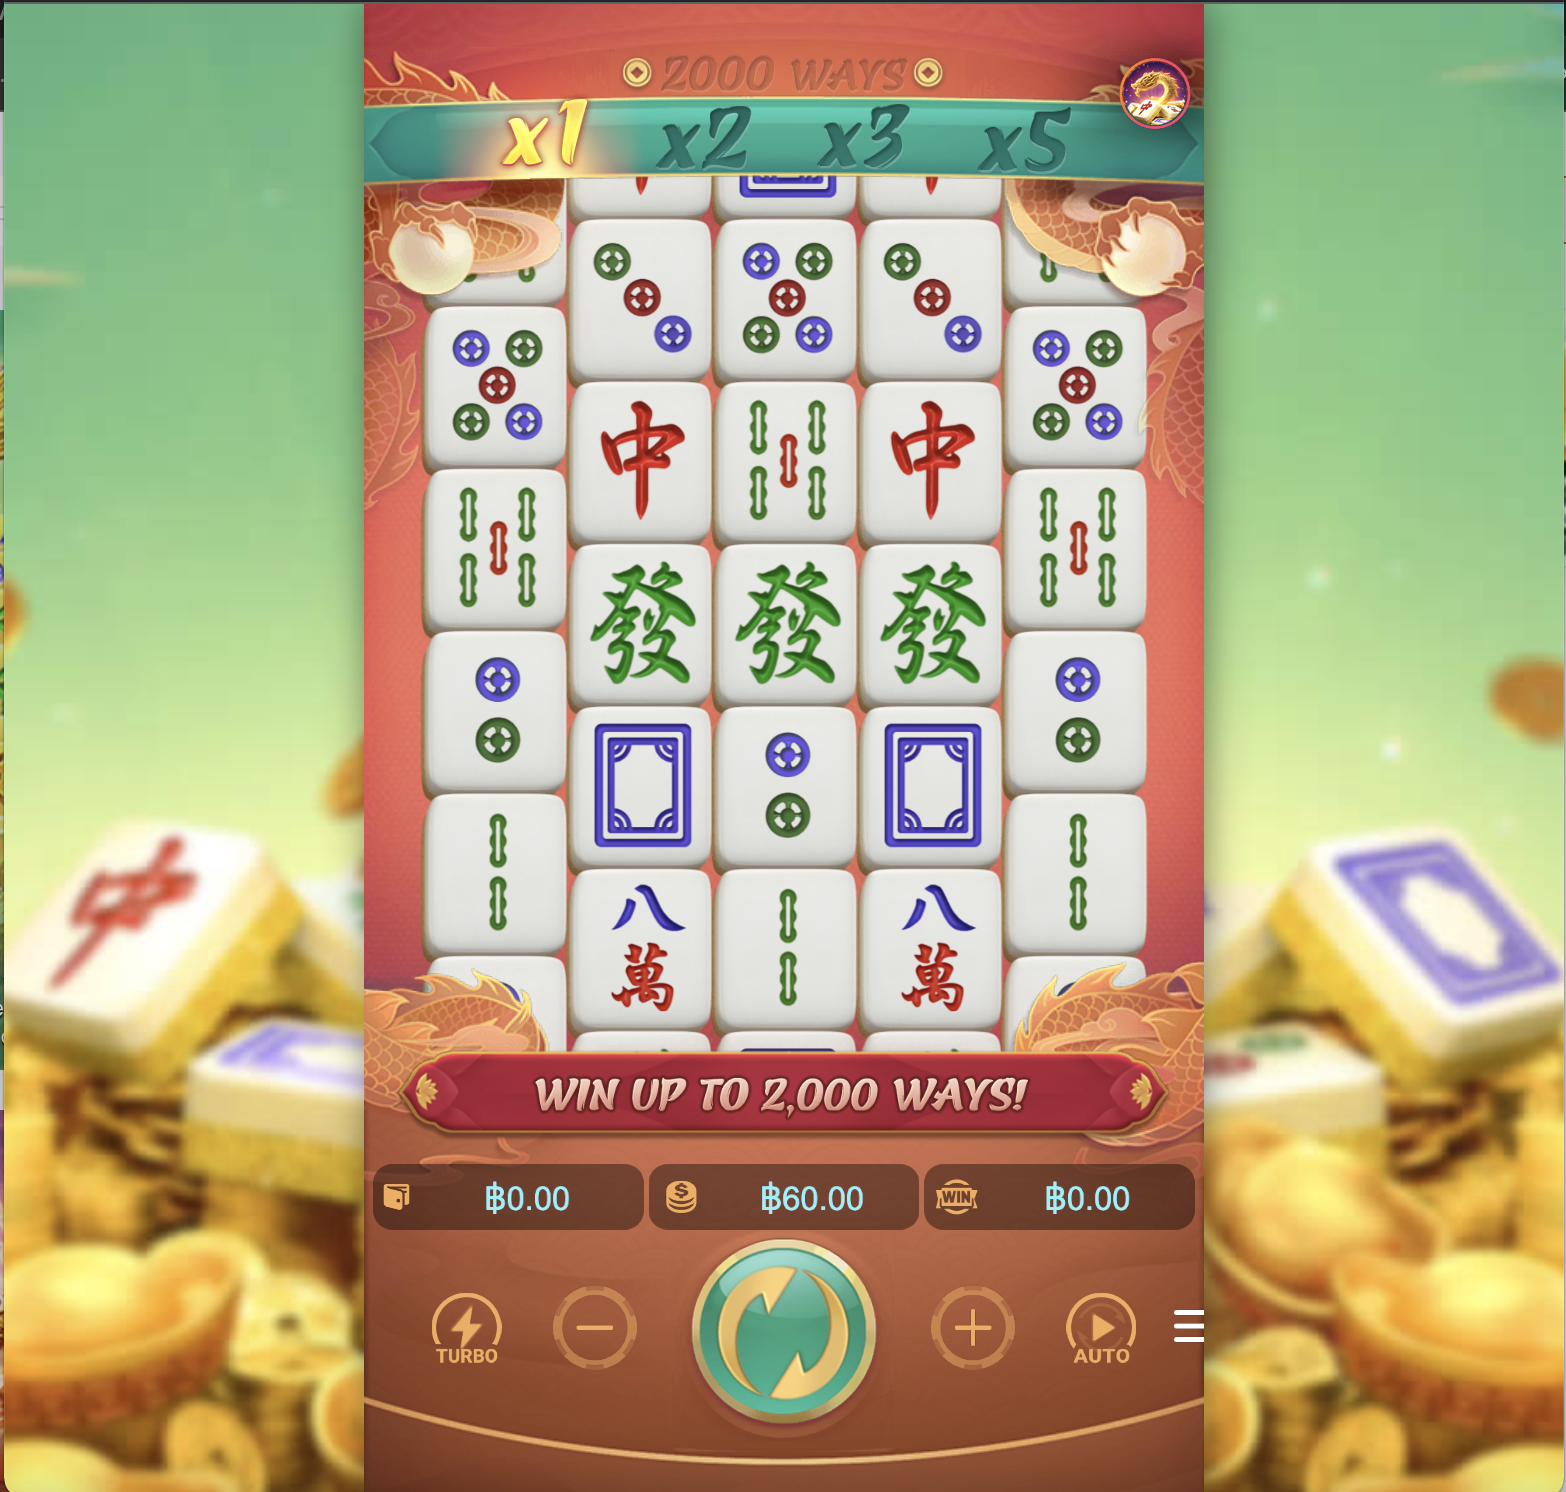 Graphic online casino games